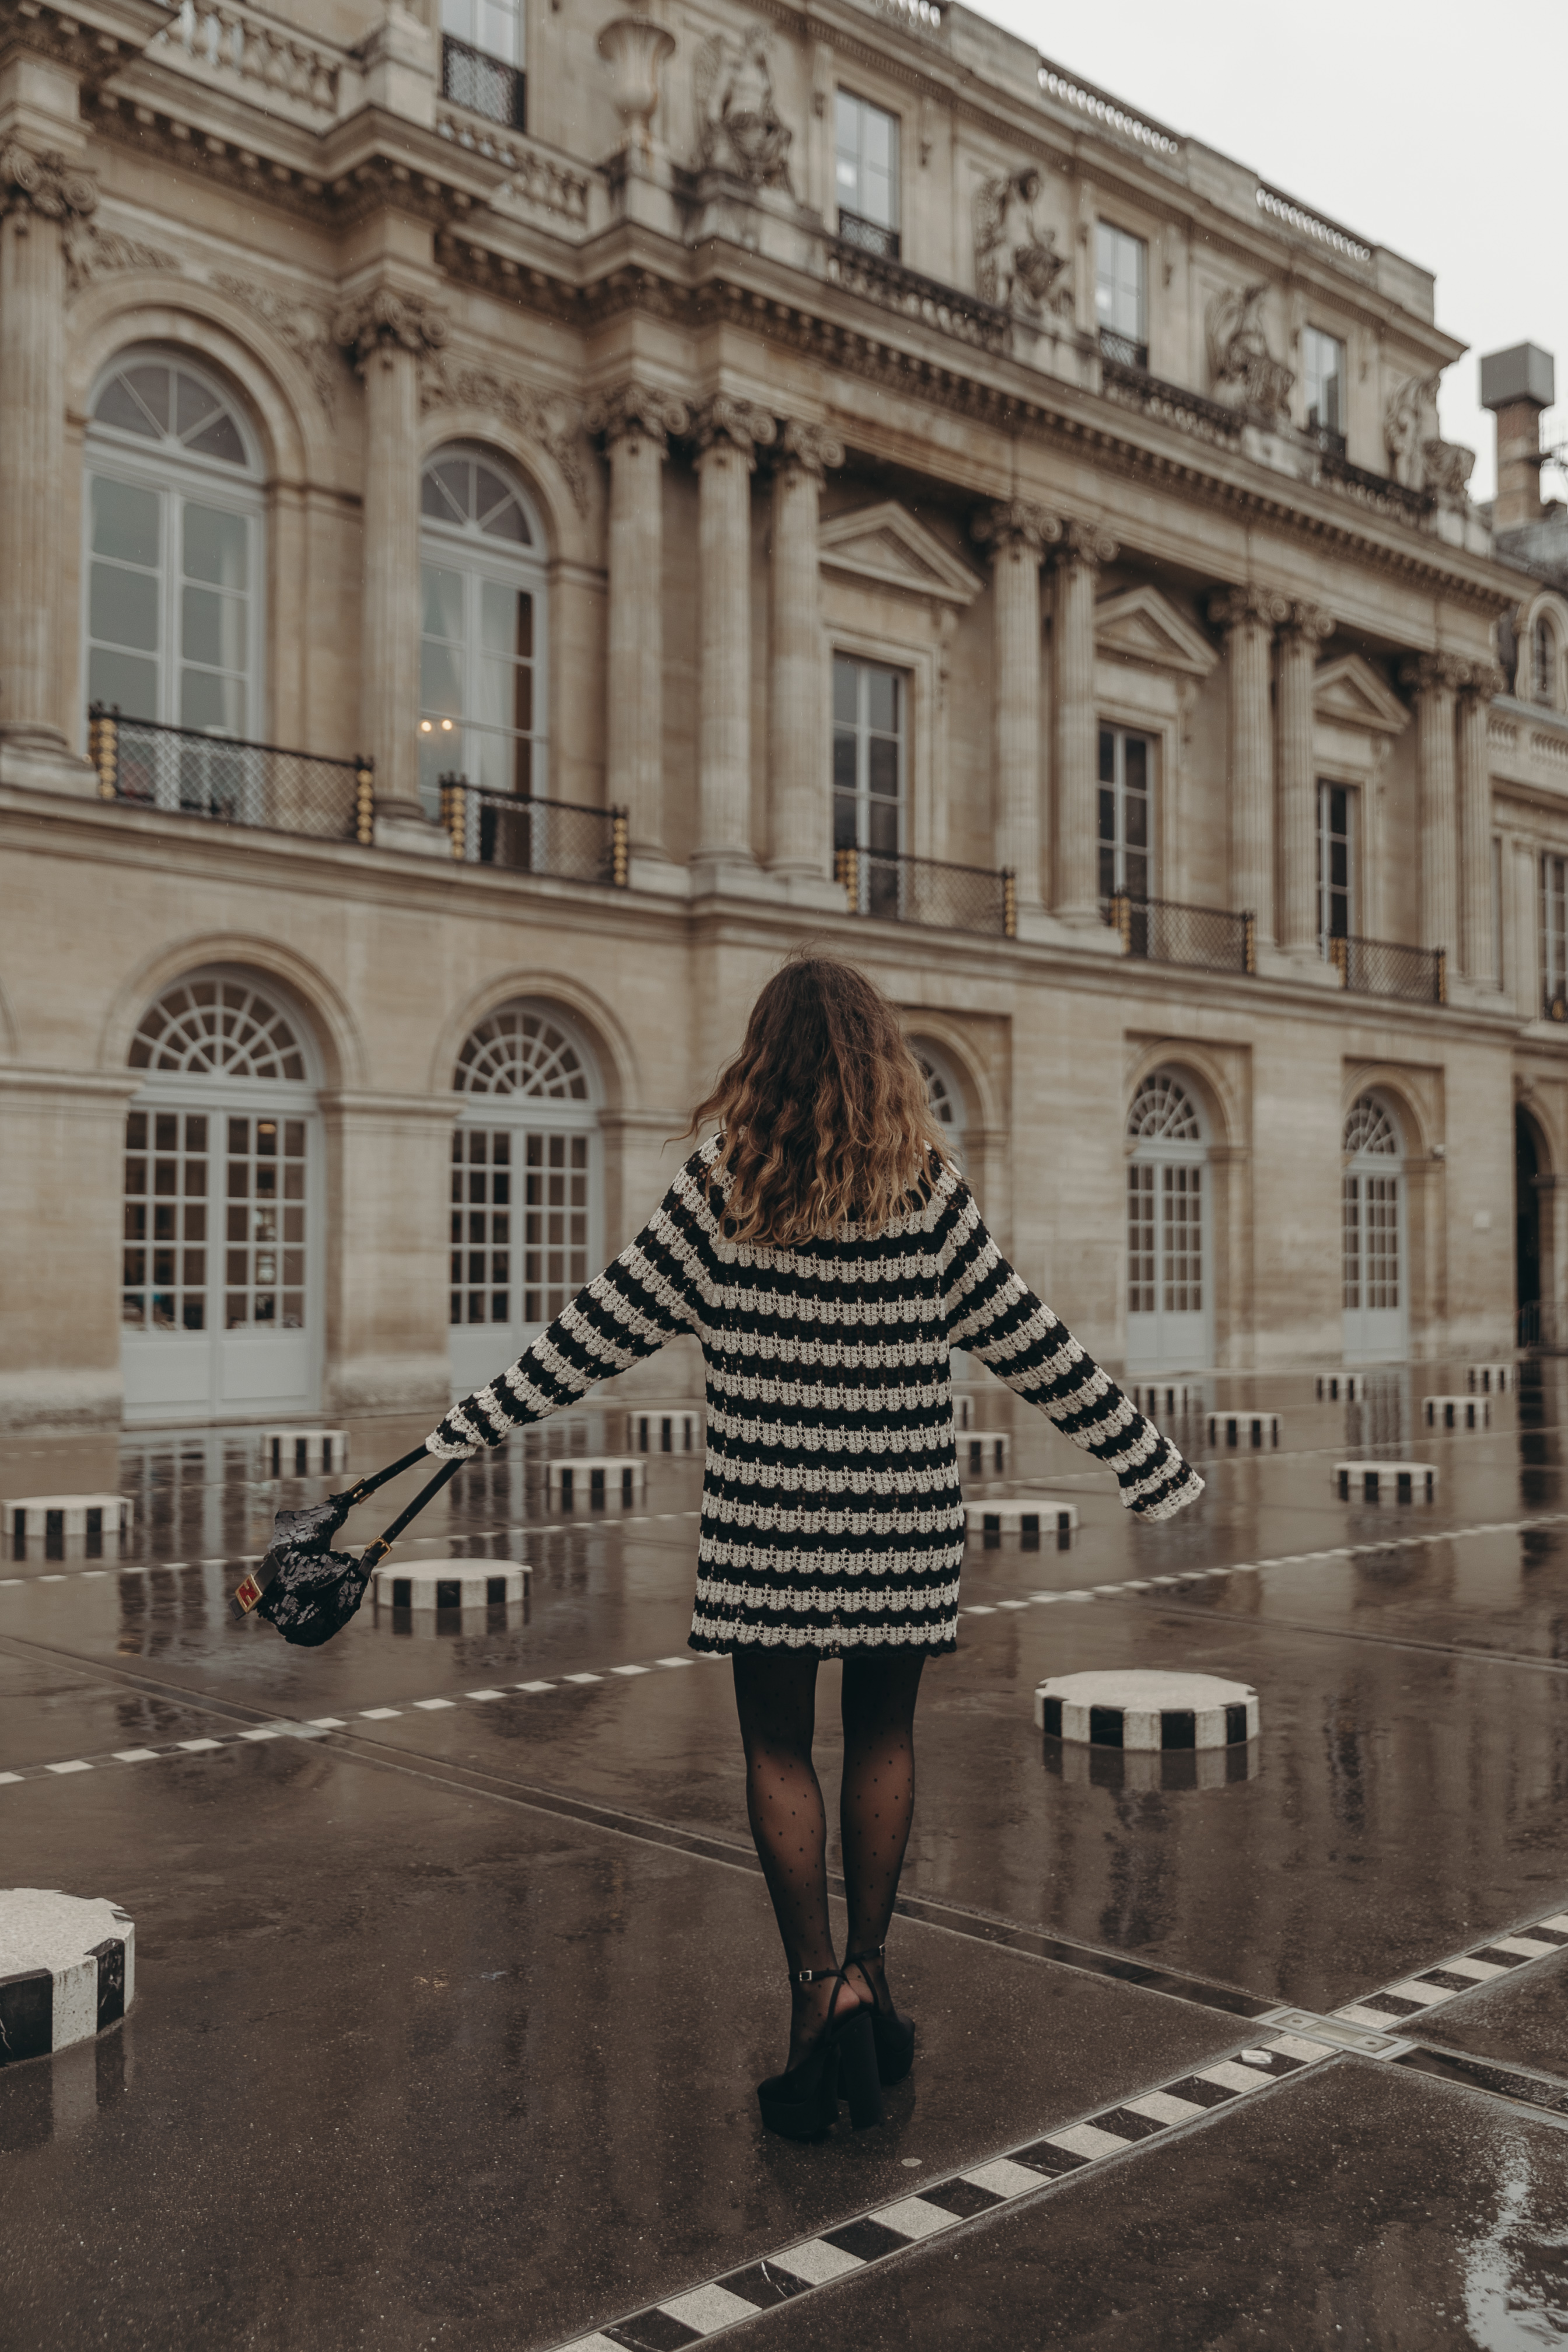 Sara from Collage Vintage at Paris Fashion Week. Wearing a striped knit long sweater, Fendi vintage bag and platform sandals.